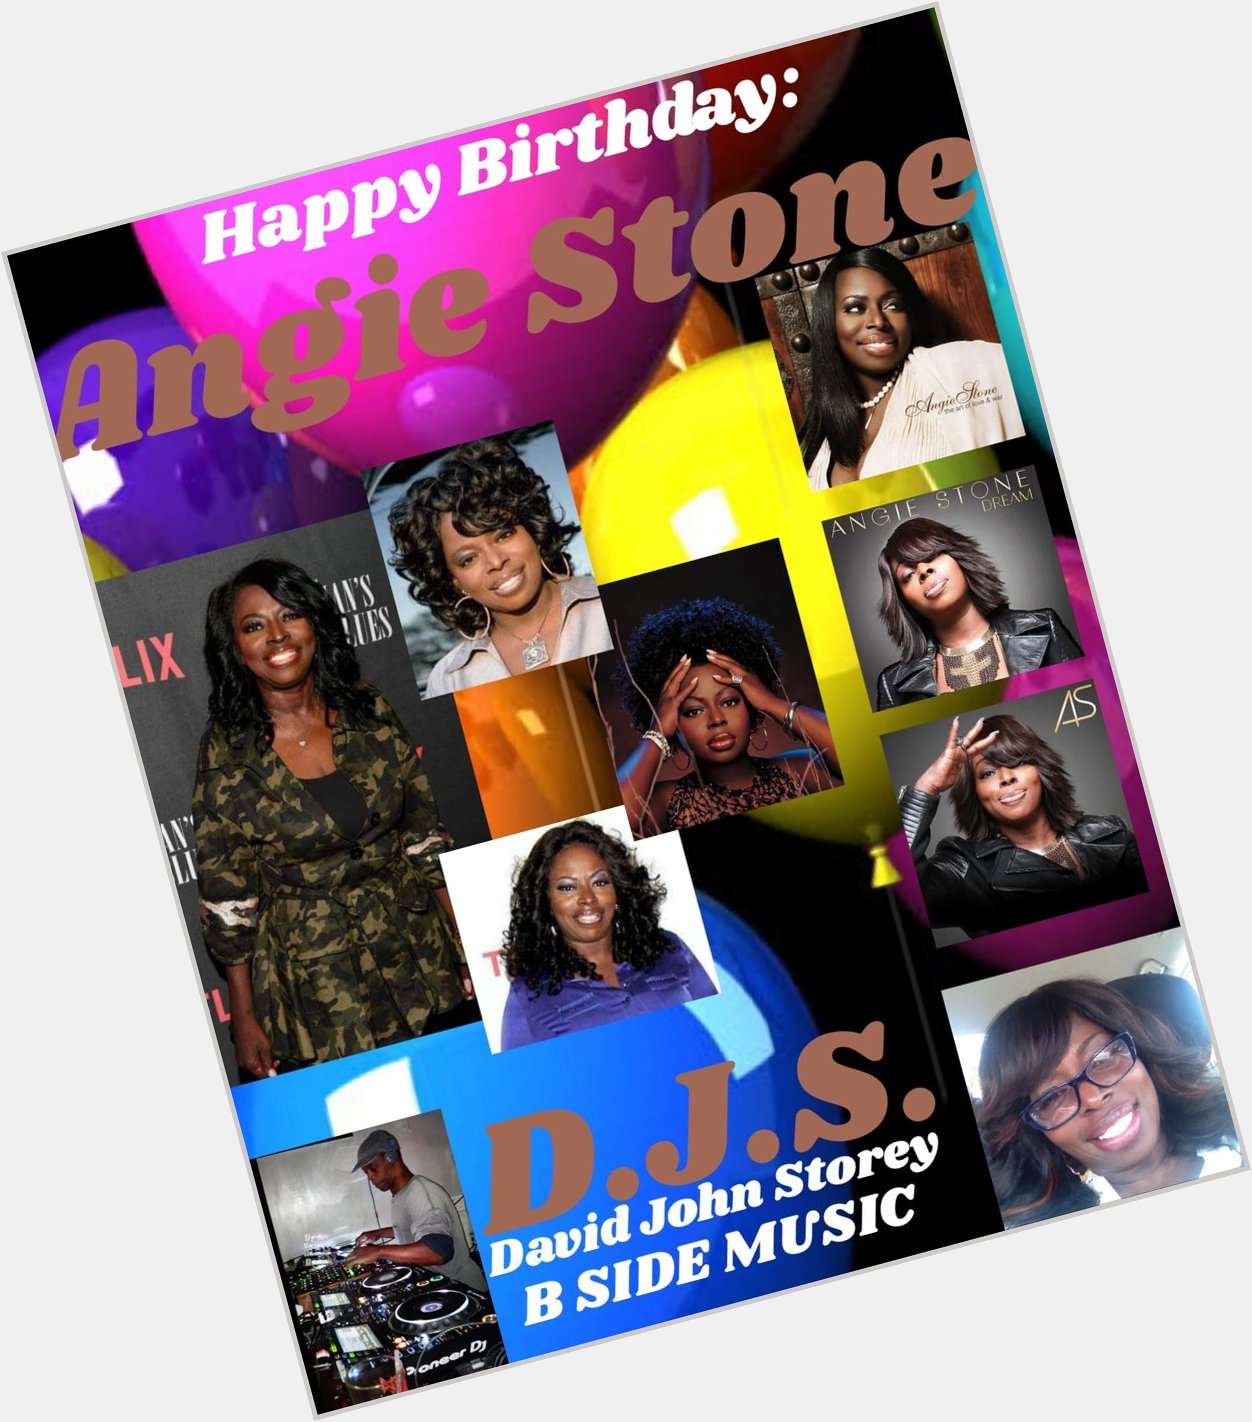 I(D.J.S.)\"B SIDE\" wish Singer \"ANGIE STONE\" a Happy Birthday!!!! 